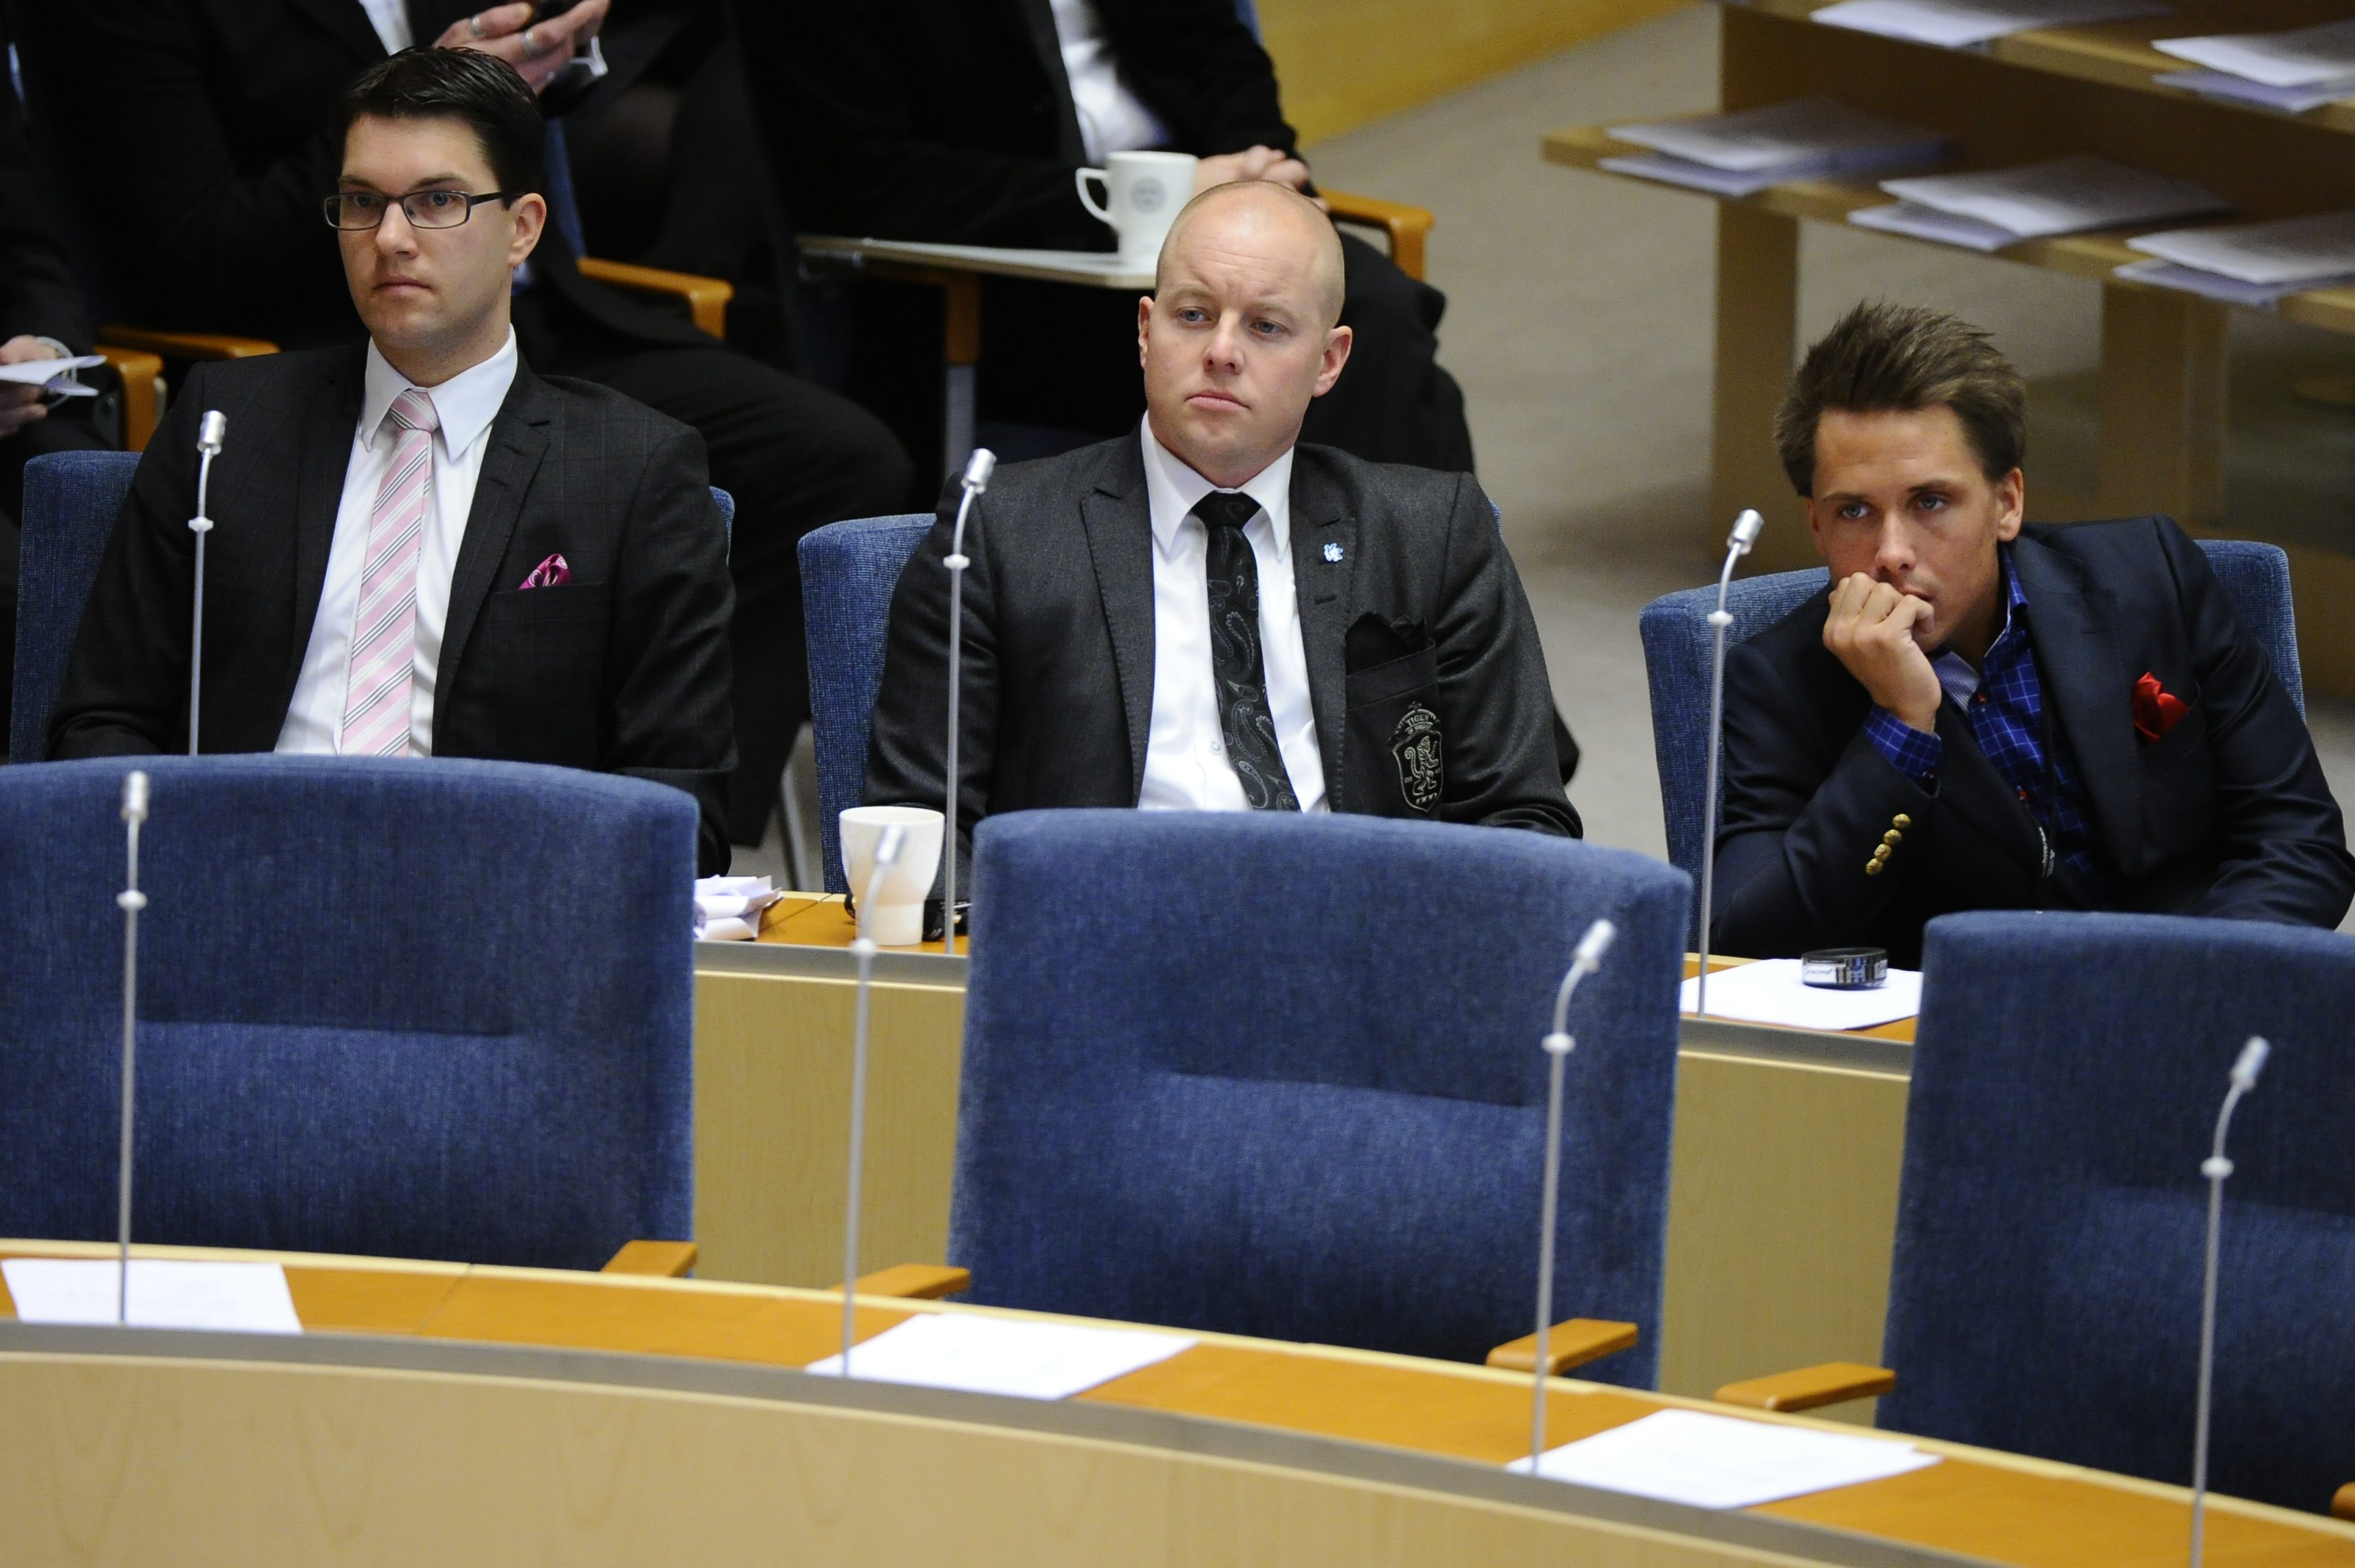 Politik, Sverigedemokraterna, Erik Almqvist, Jimmie Åkesson, William Petzäll, Alkohol